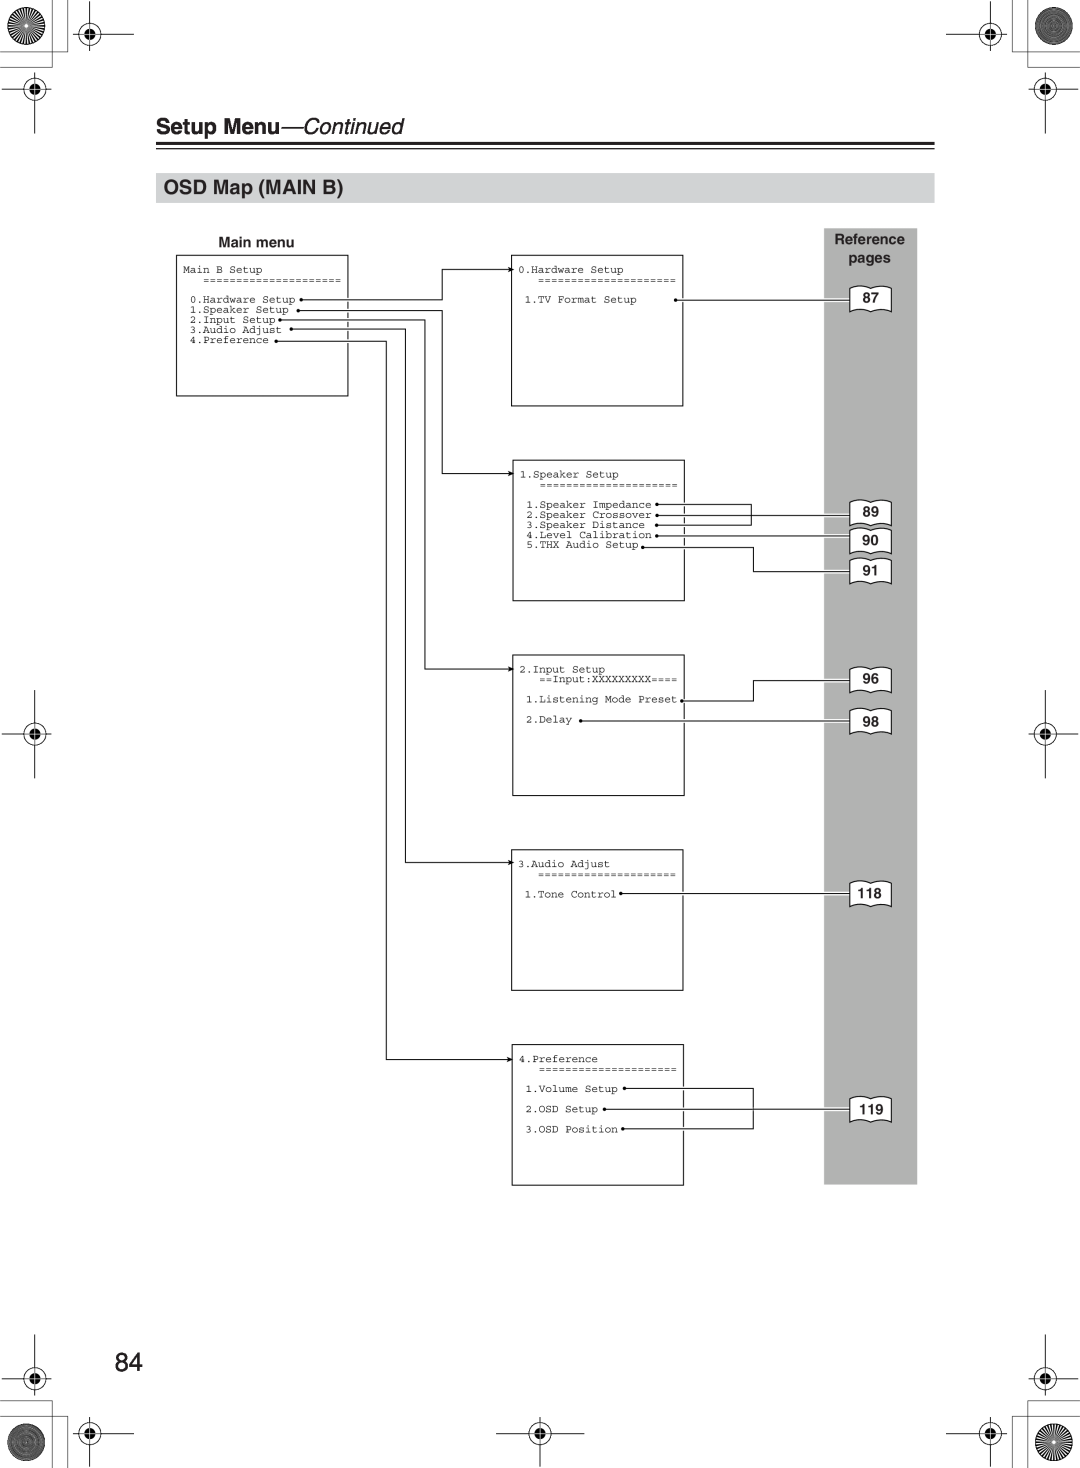 Integra DTR-10.5 instruction manual OSD Map MAIN B, Setup Menu—Continued, Main menu, Reference pages 87 89 90 91 96 98 